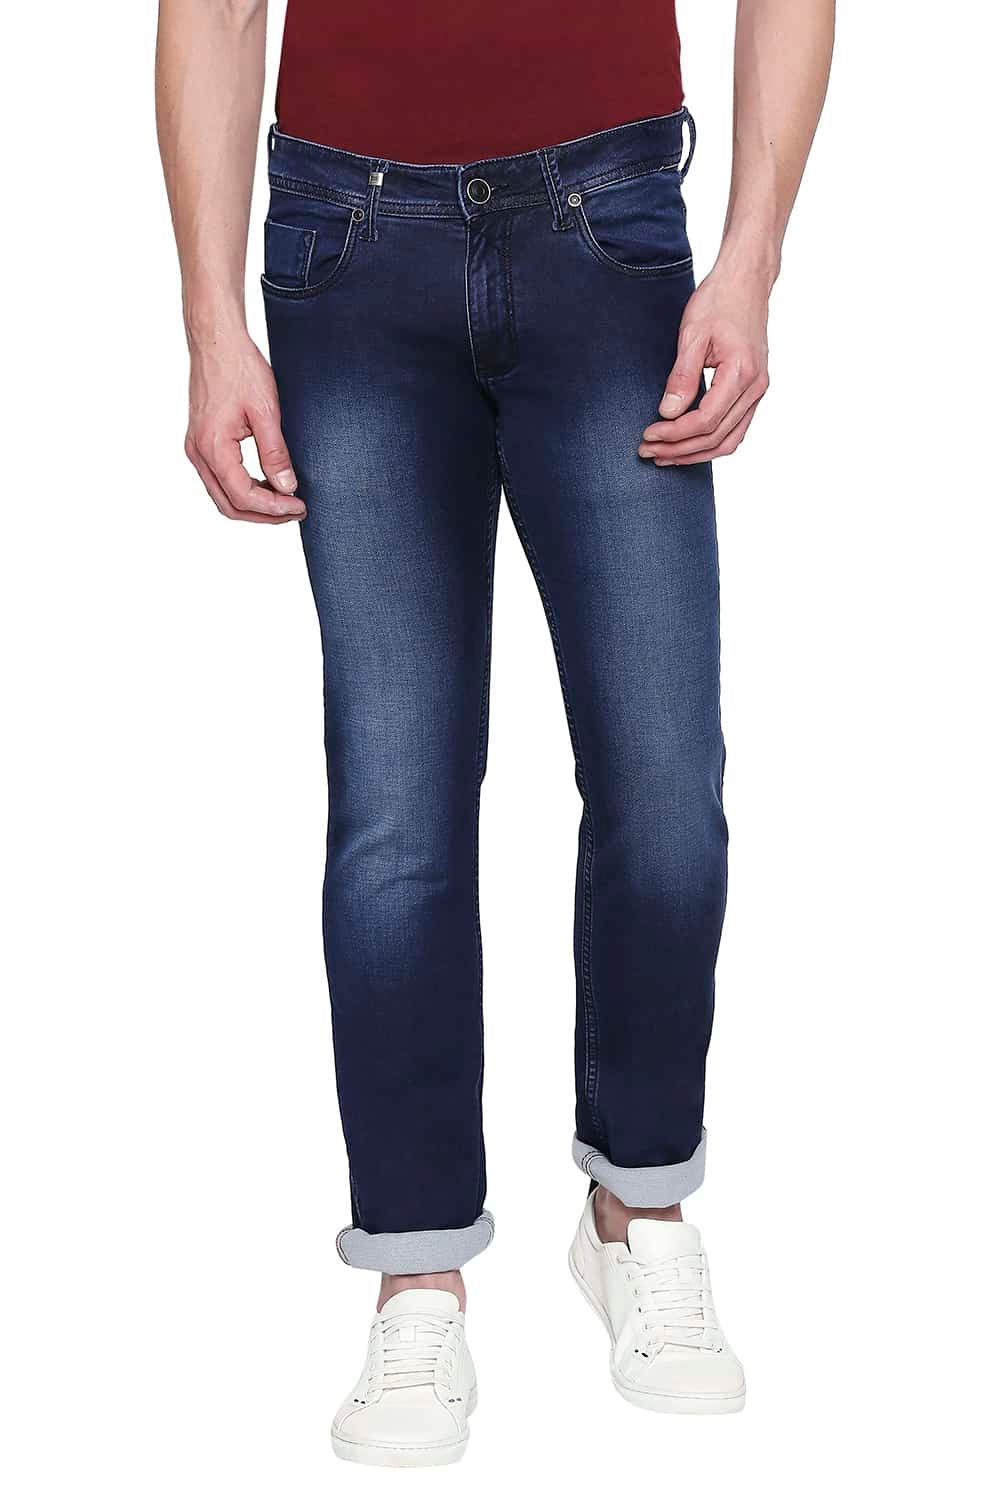 Basics | Basics Torque Fit Estate Blue Stretch Jeans